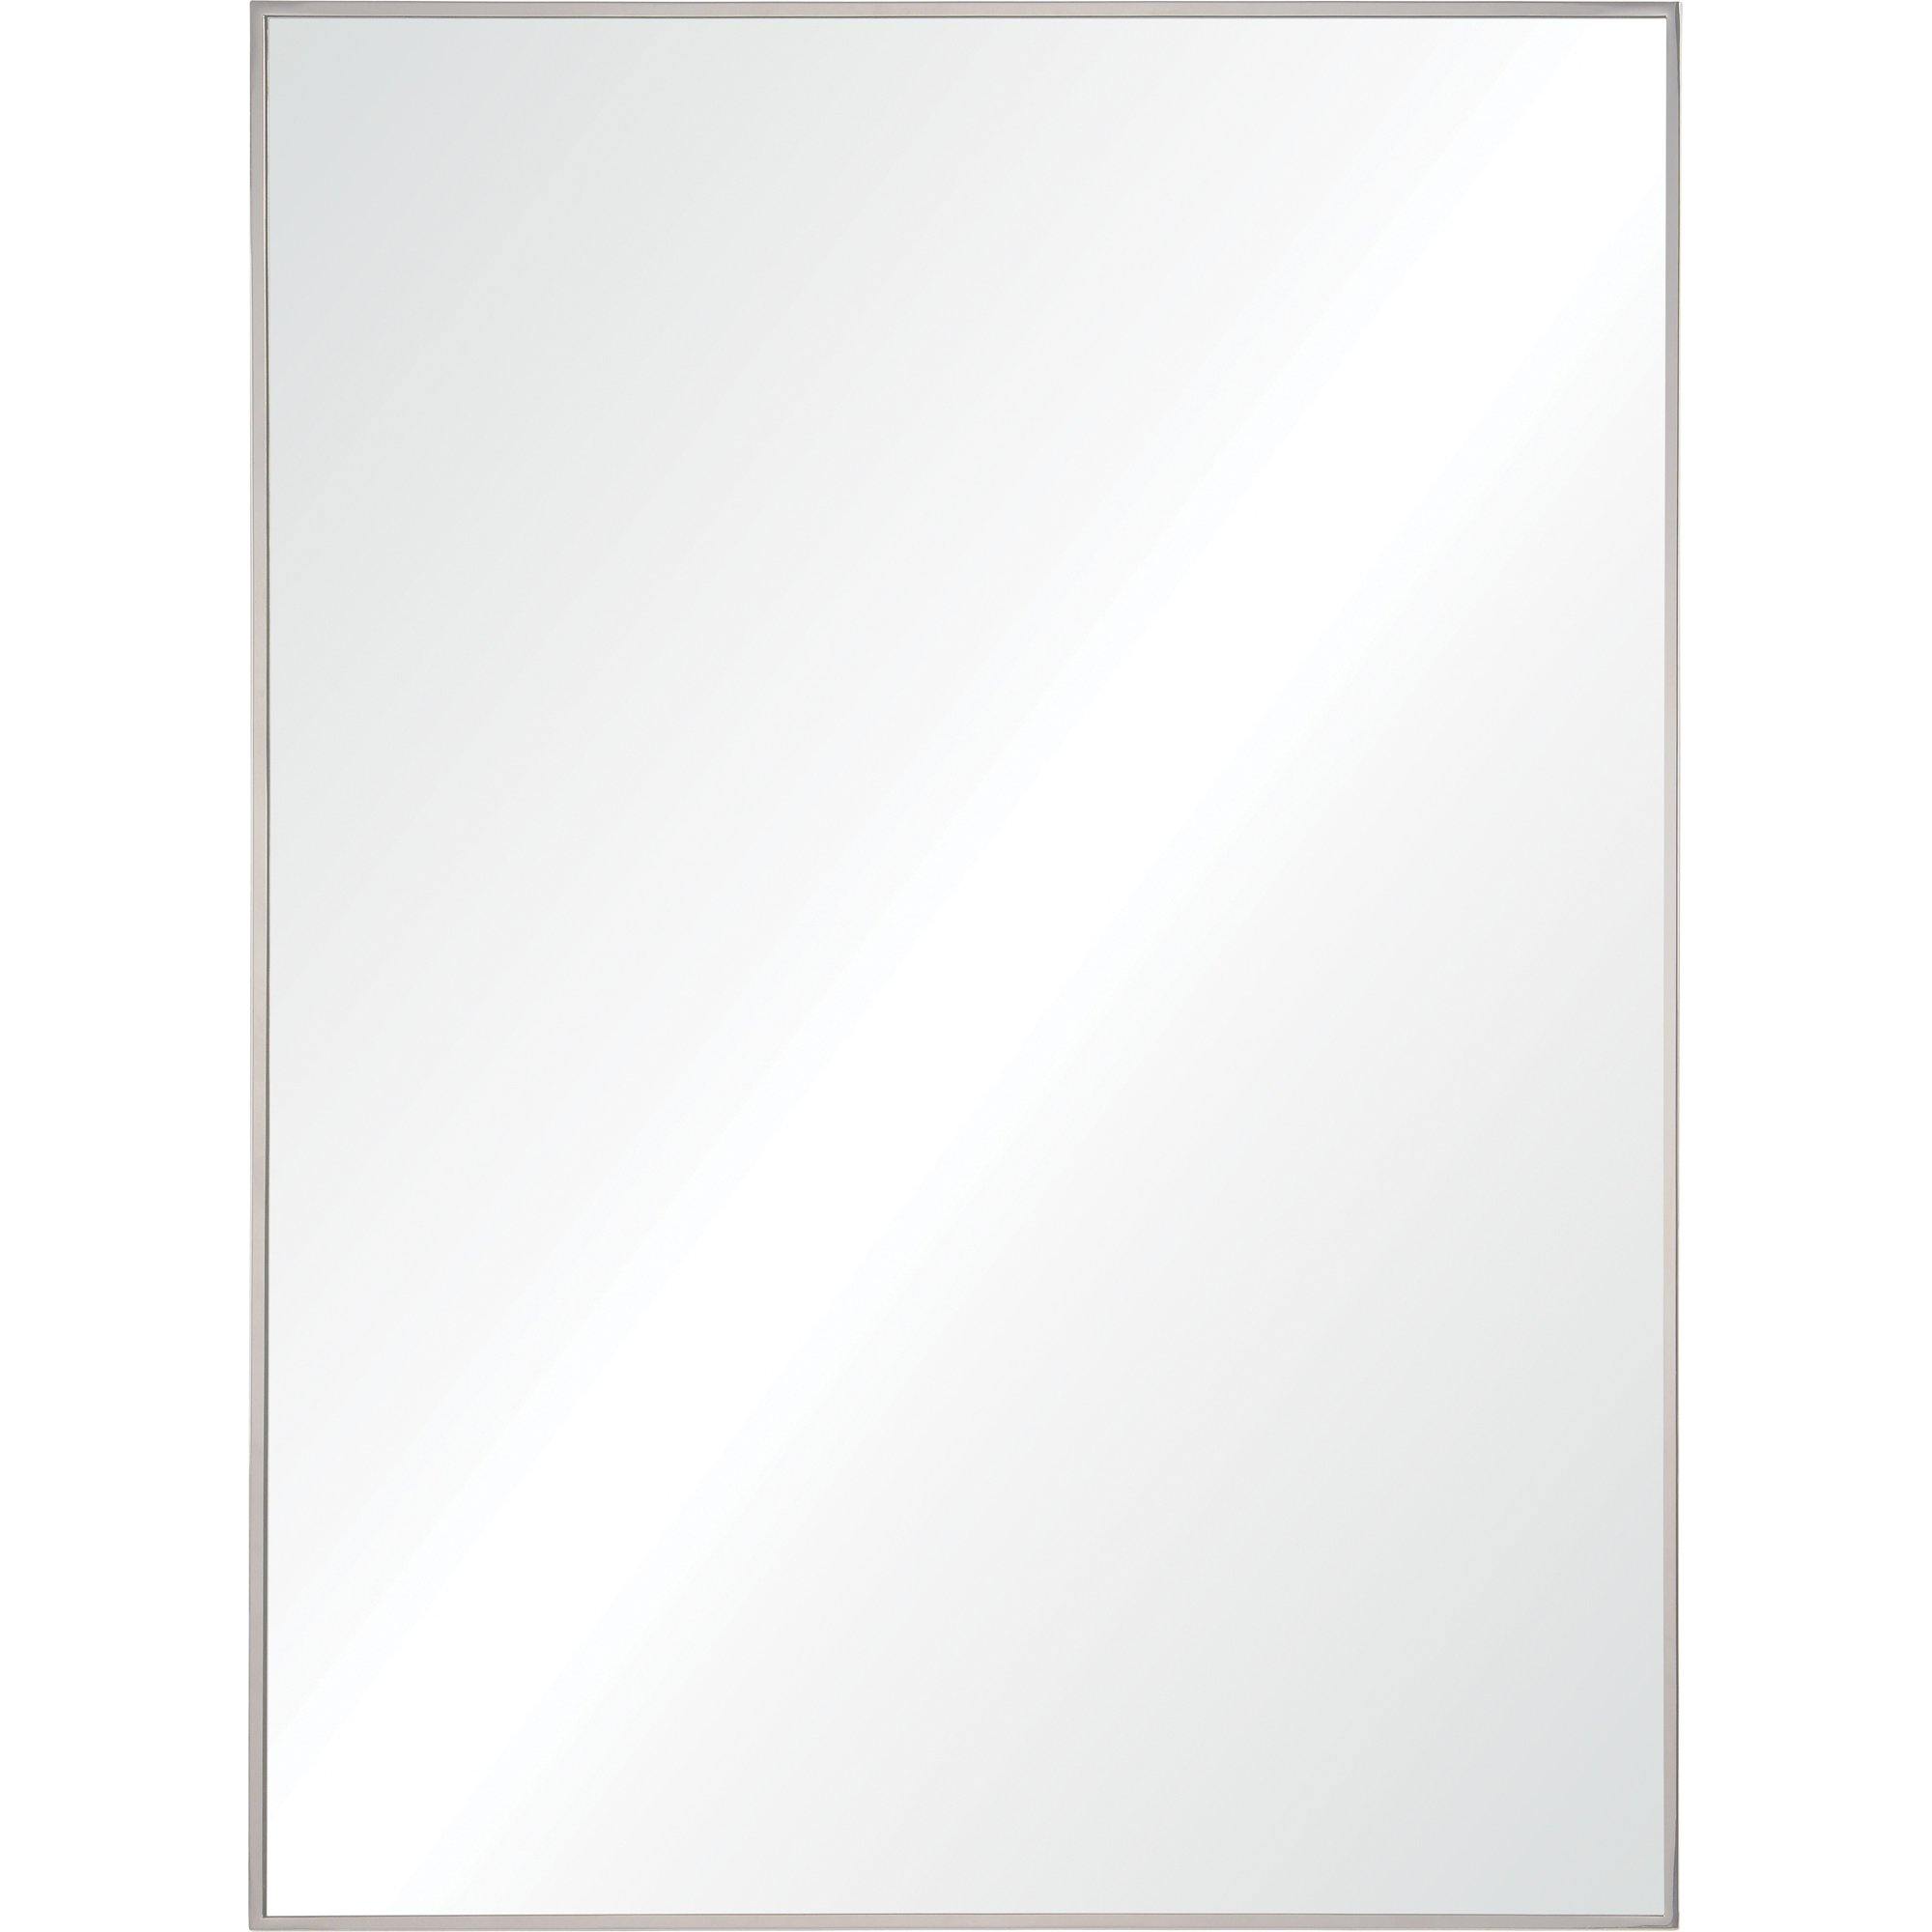 Carmelle Mirror - Reimagine Designs - Mirror, Mirrors